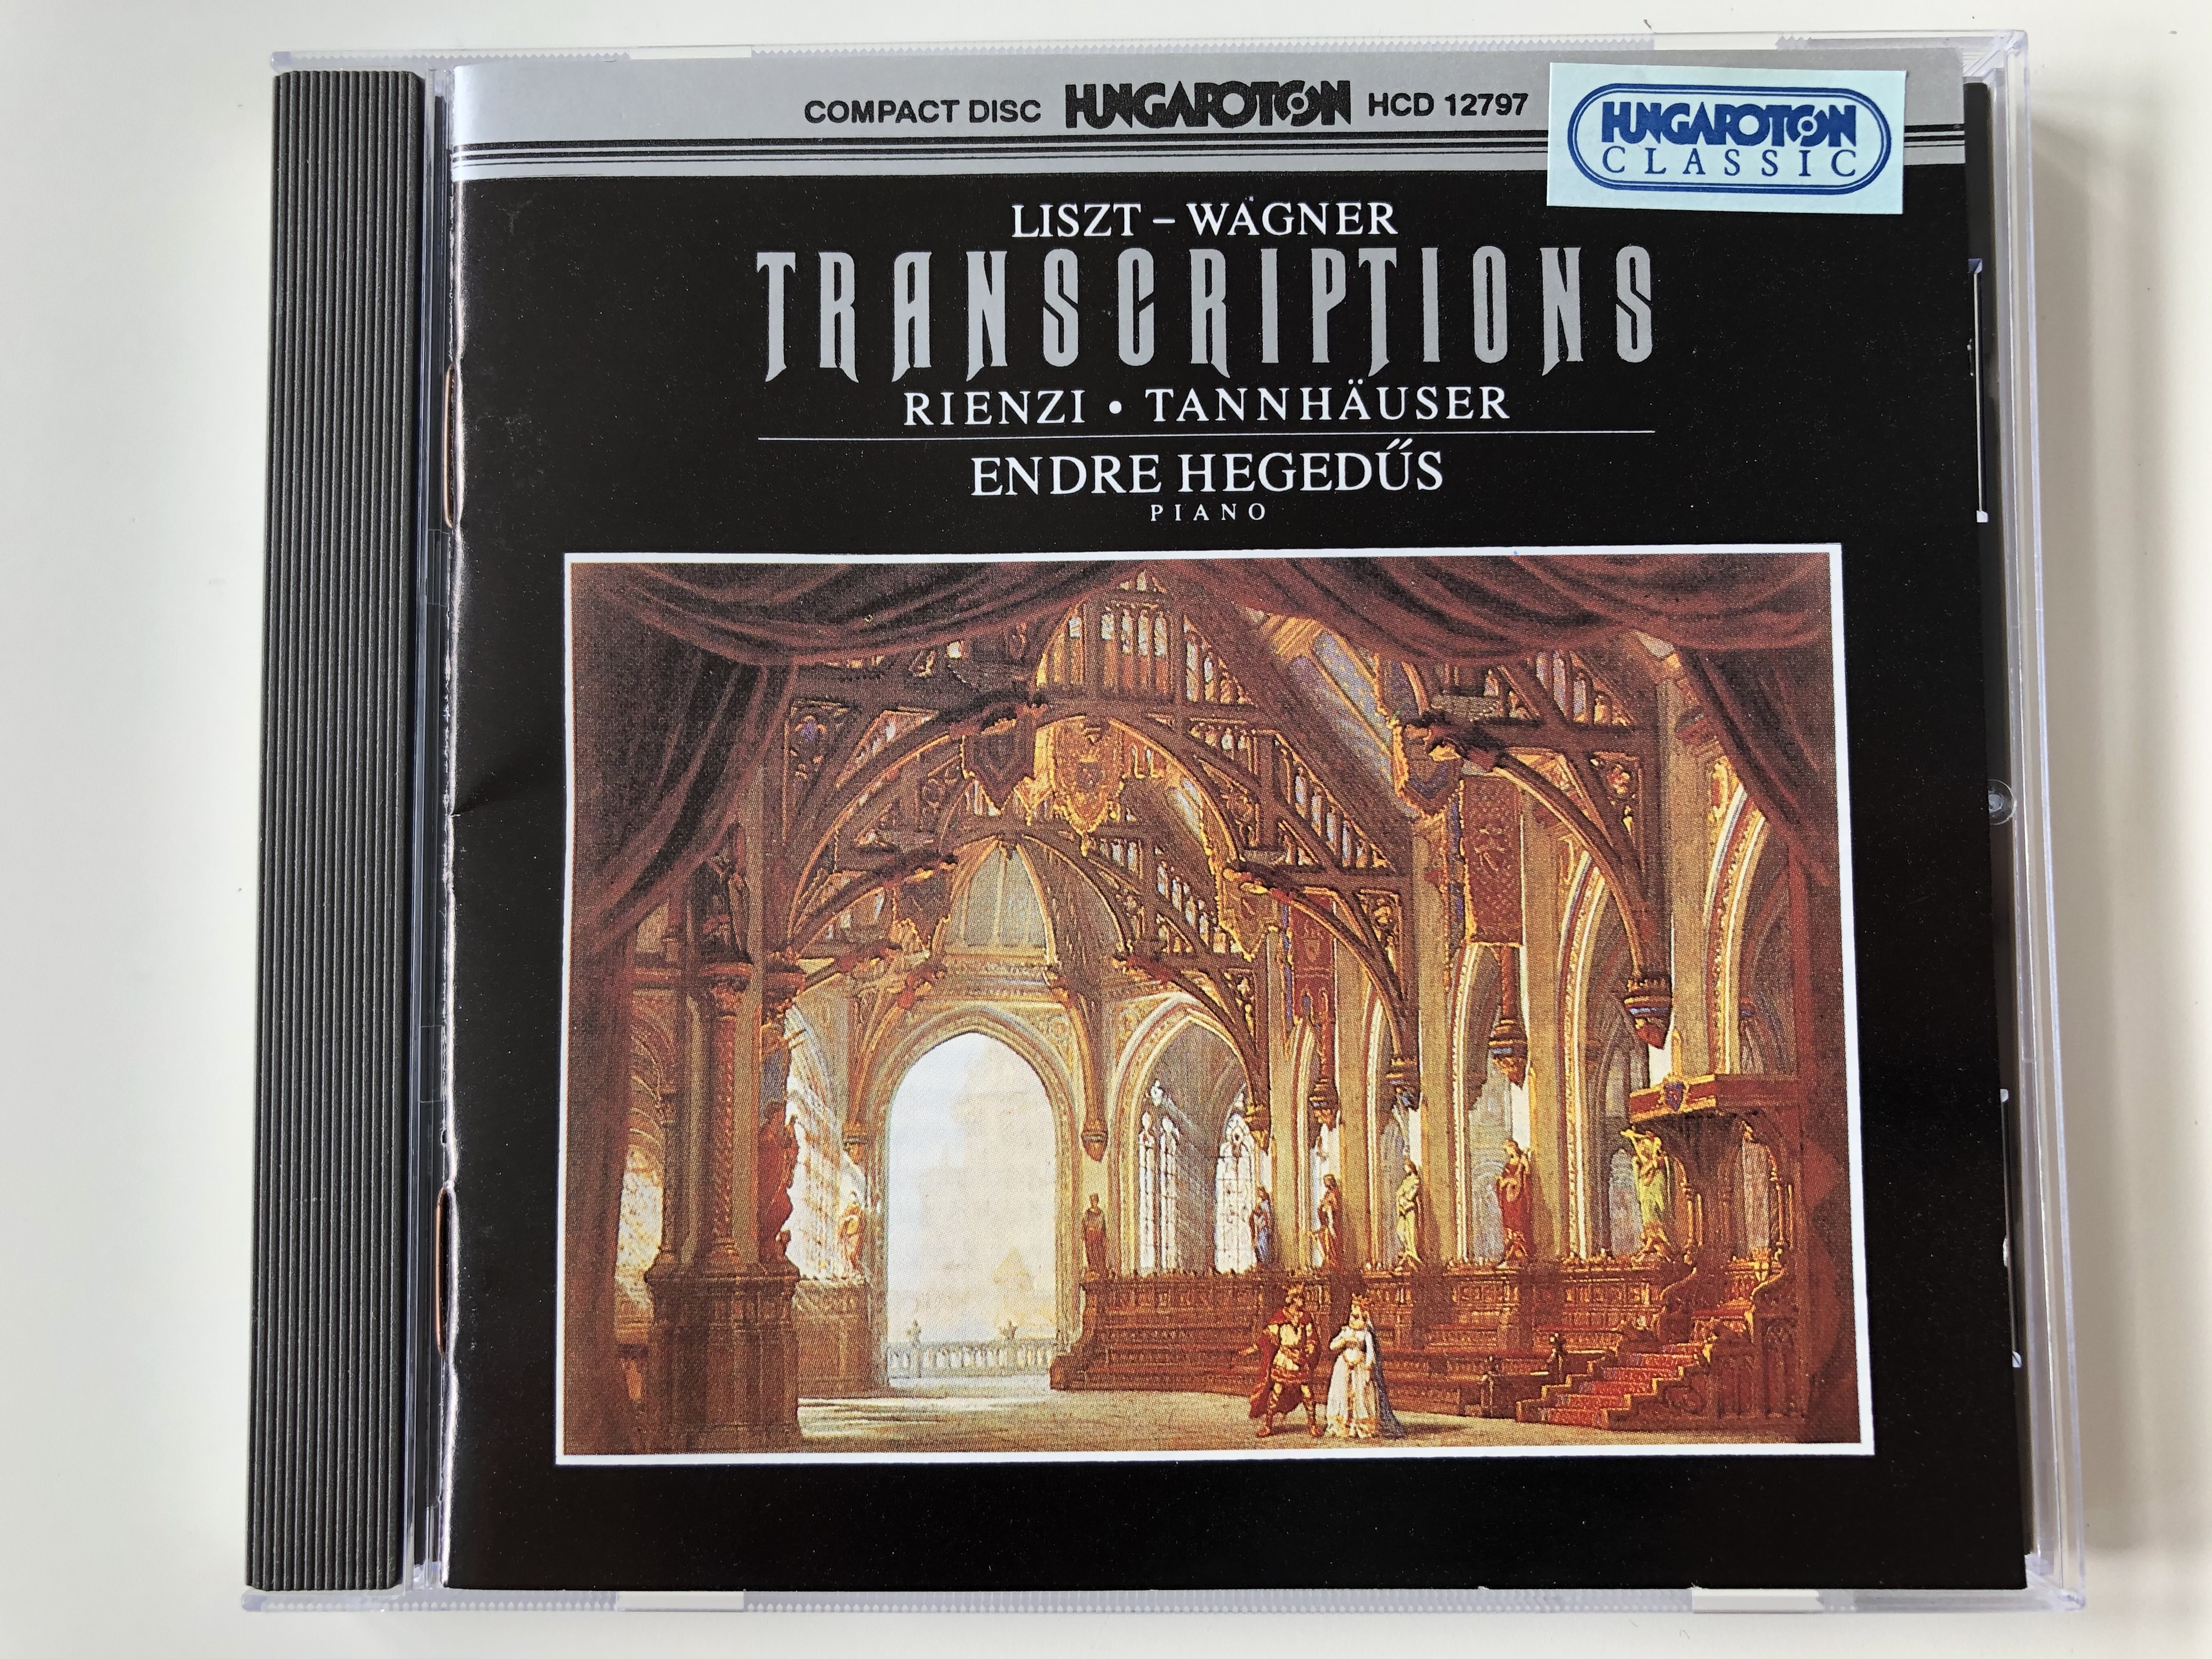 Liszt-Wagner - Transcriptions, Rienzi, Tannhauser / Endre Hegedu's - piano  / Hungaroton Classic Audio CD 1995 Stereo / HCD 12797 - bibleinmylanguage